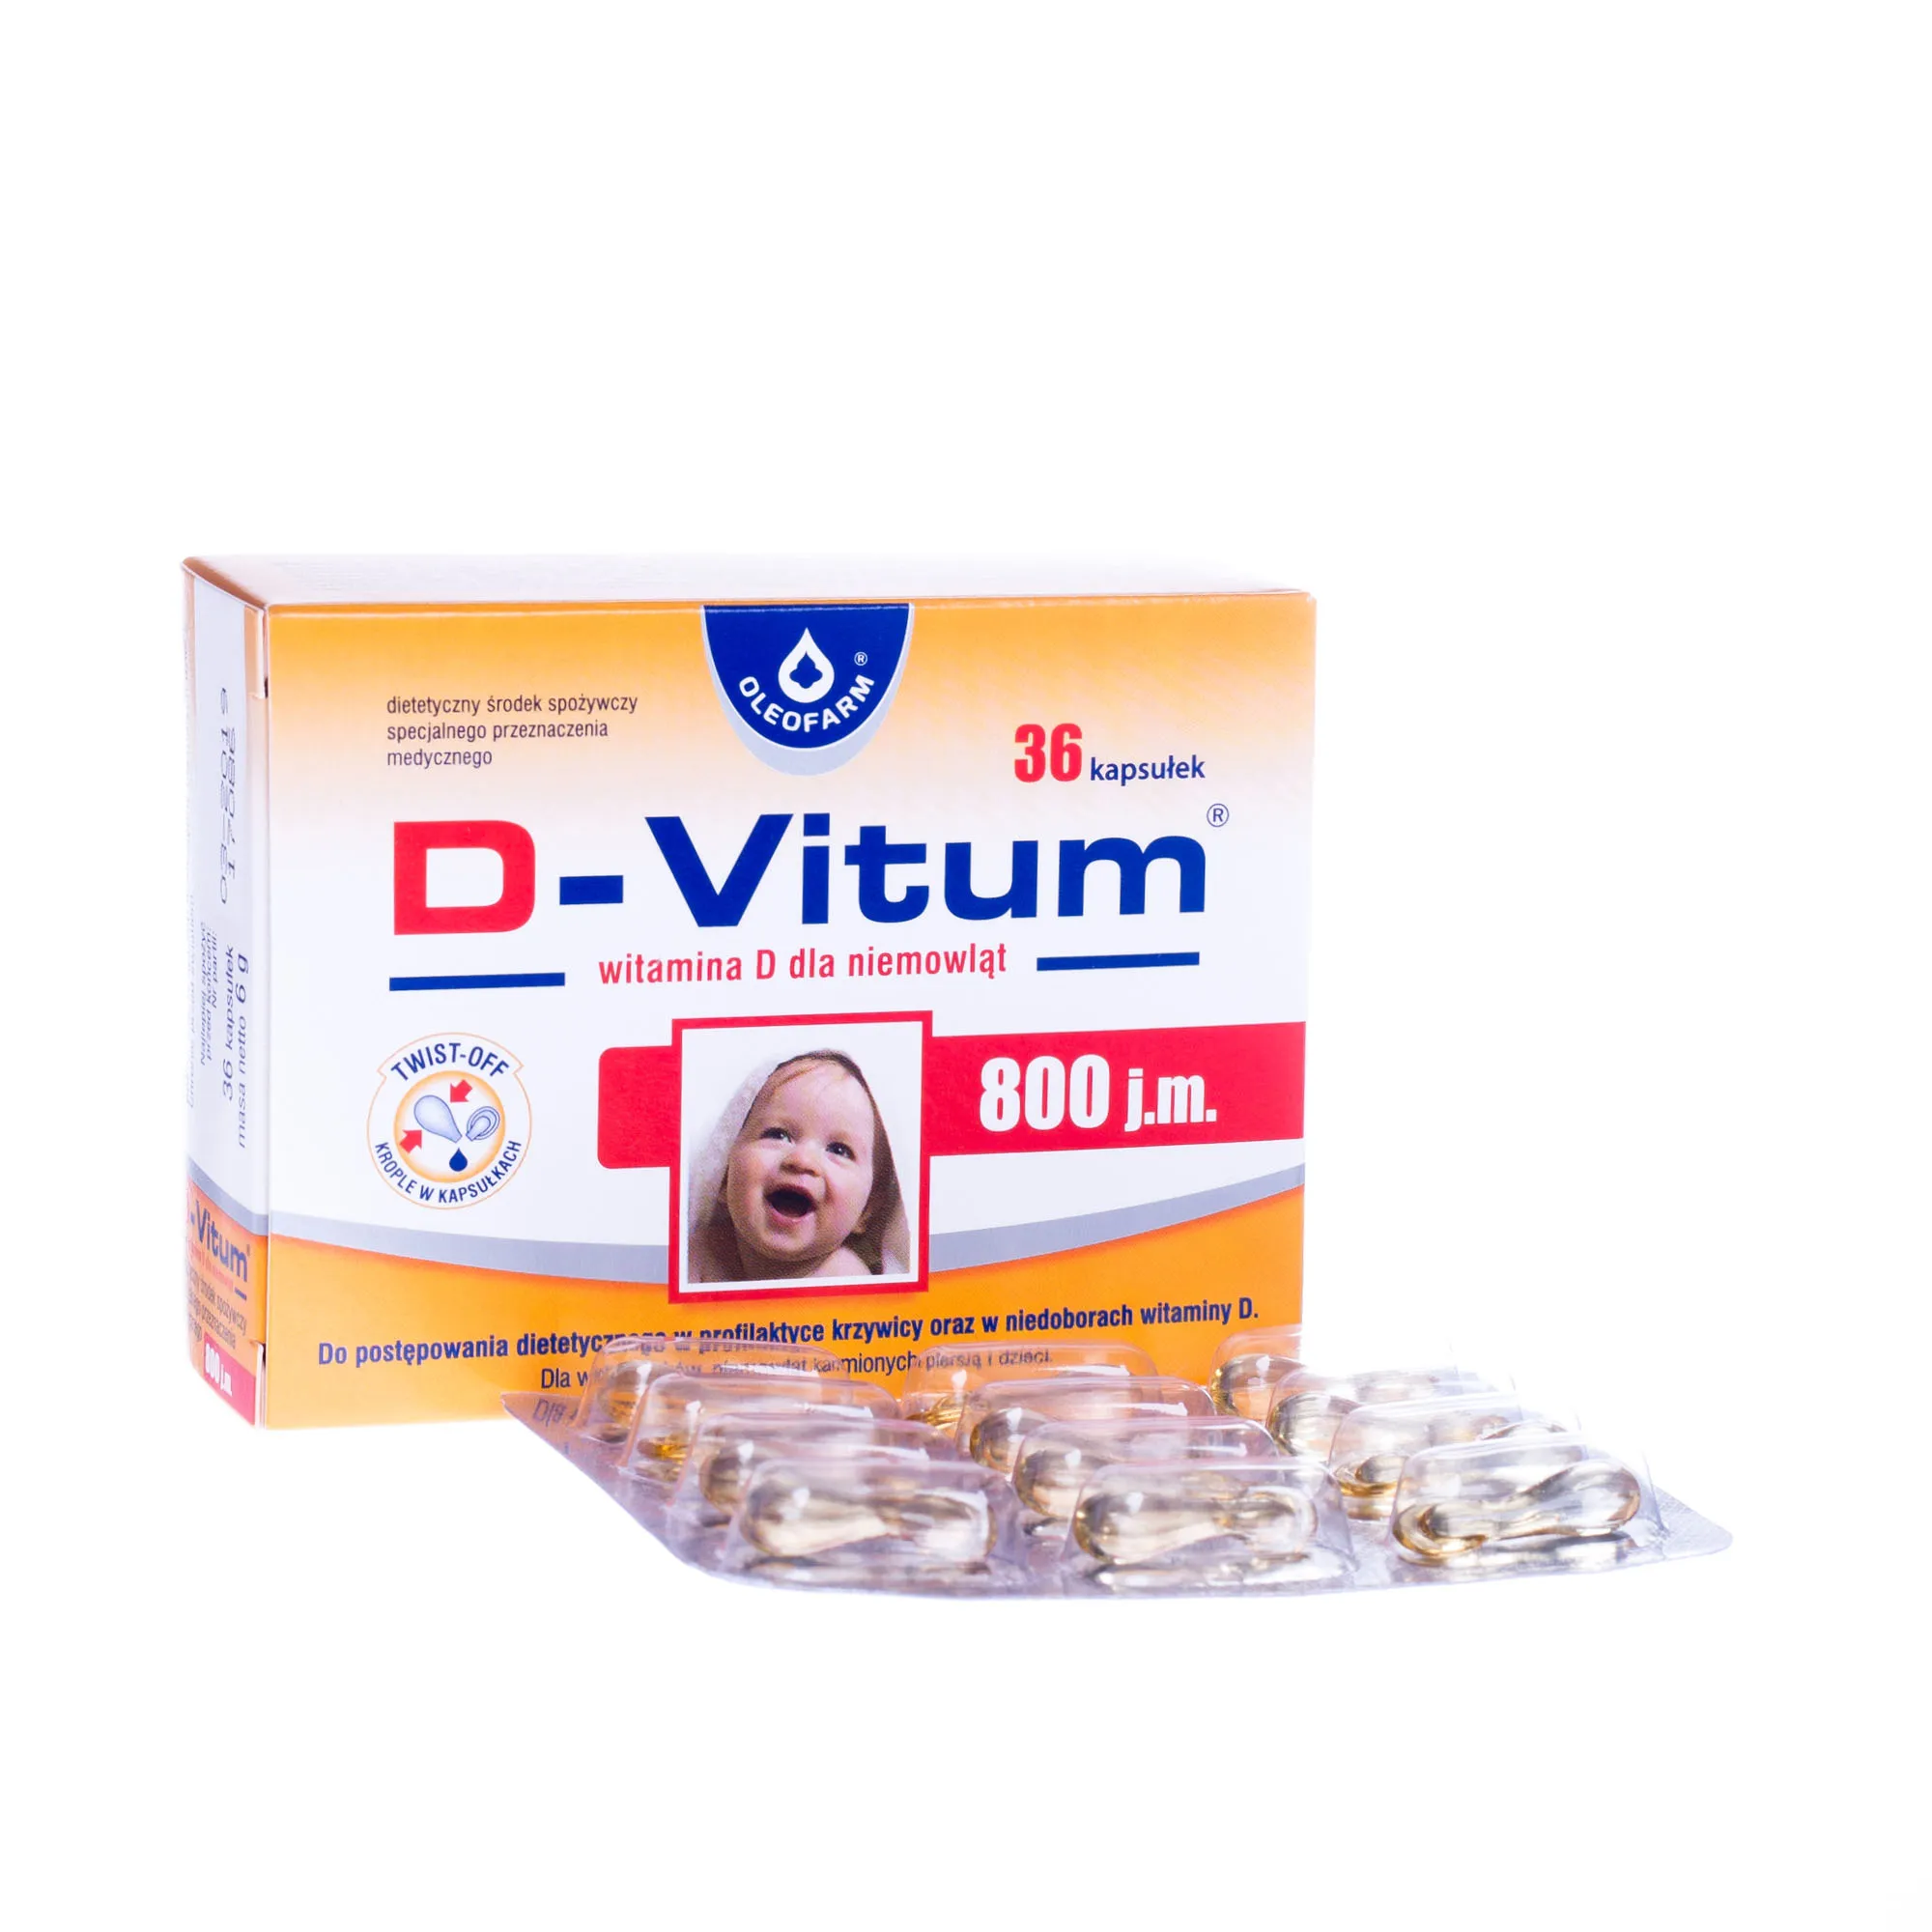 D-Vitum witamina D dla niemowląt, 800 j.m., 36 kapsułek twist-off